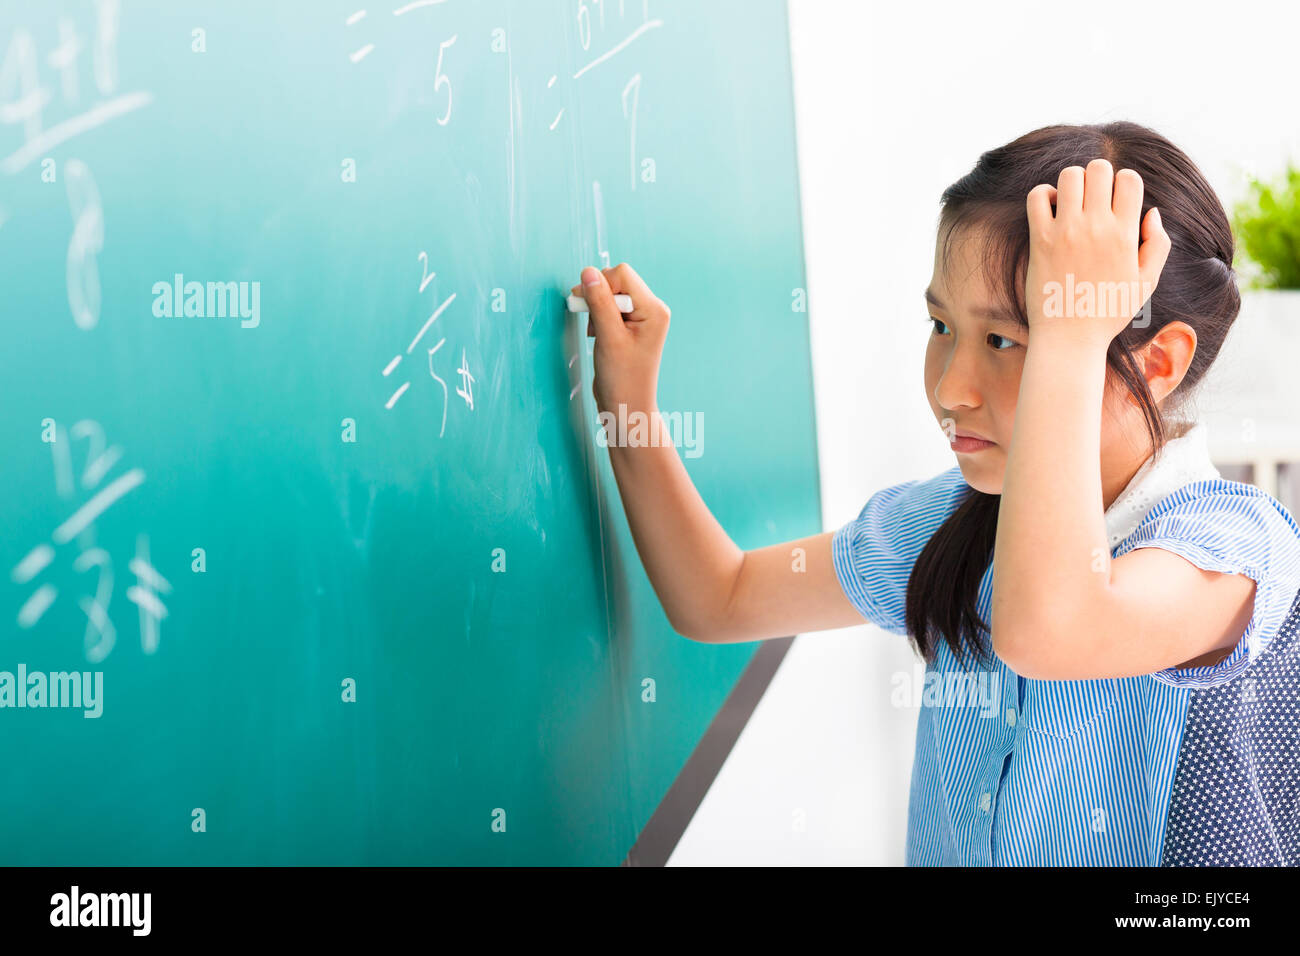 school girl doing math problems on the chalkboard Stock Photo